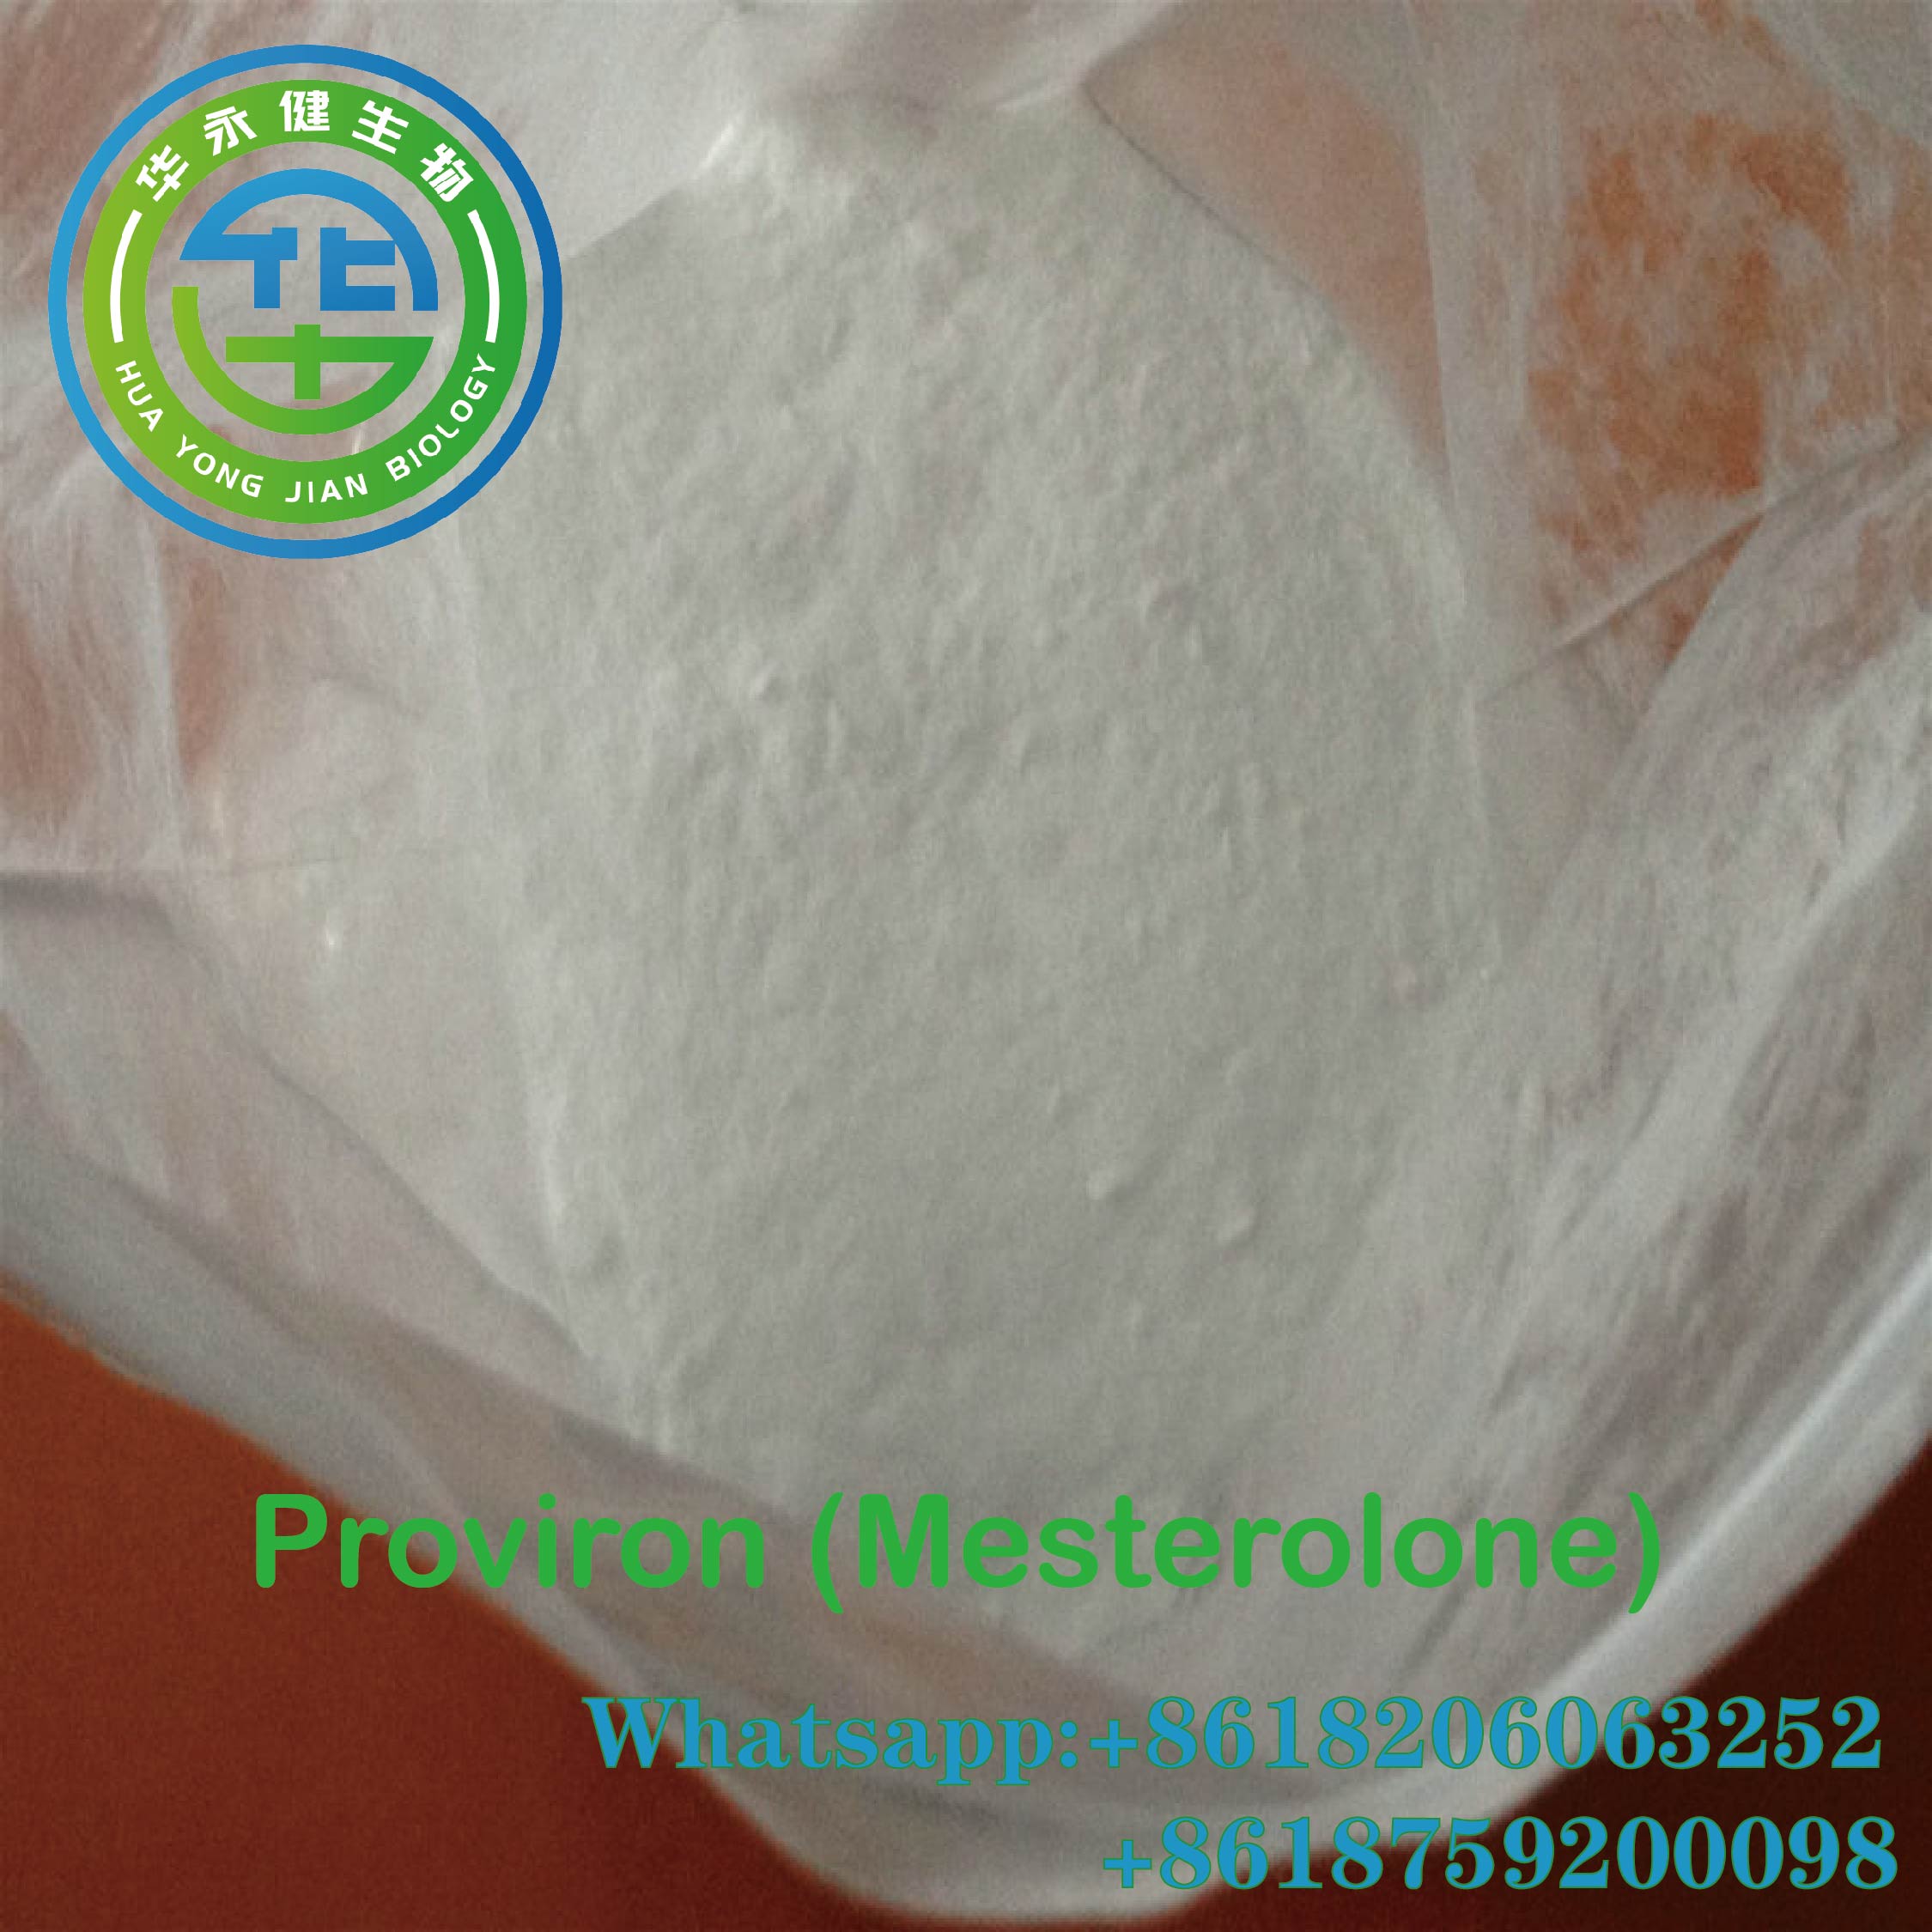 Medical Grade Oral Proviron Anabolic Steroids Mesterolone Blend Bodybuilding Powder CAS 1424-00-6 